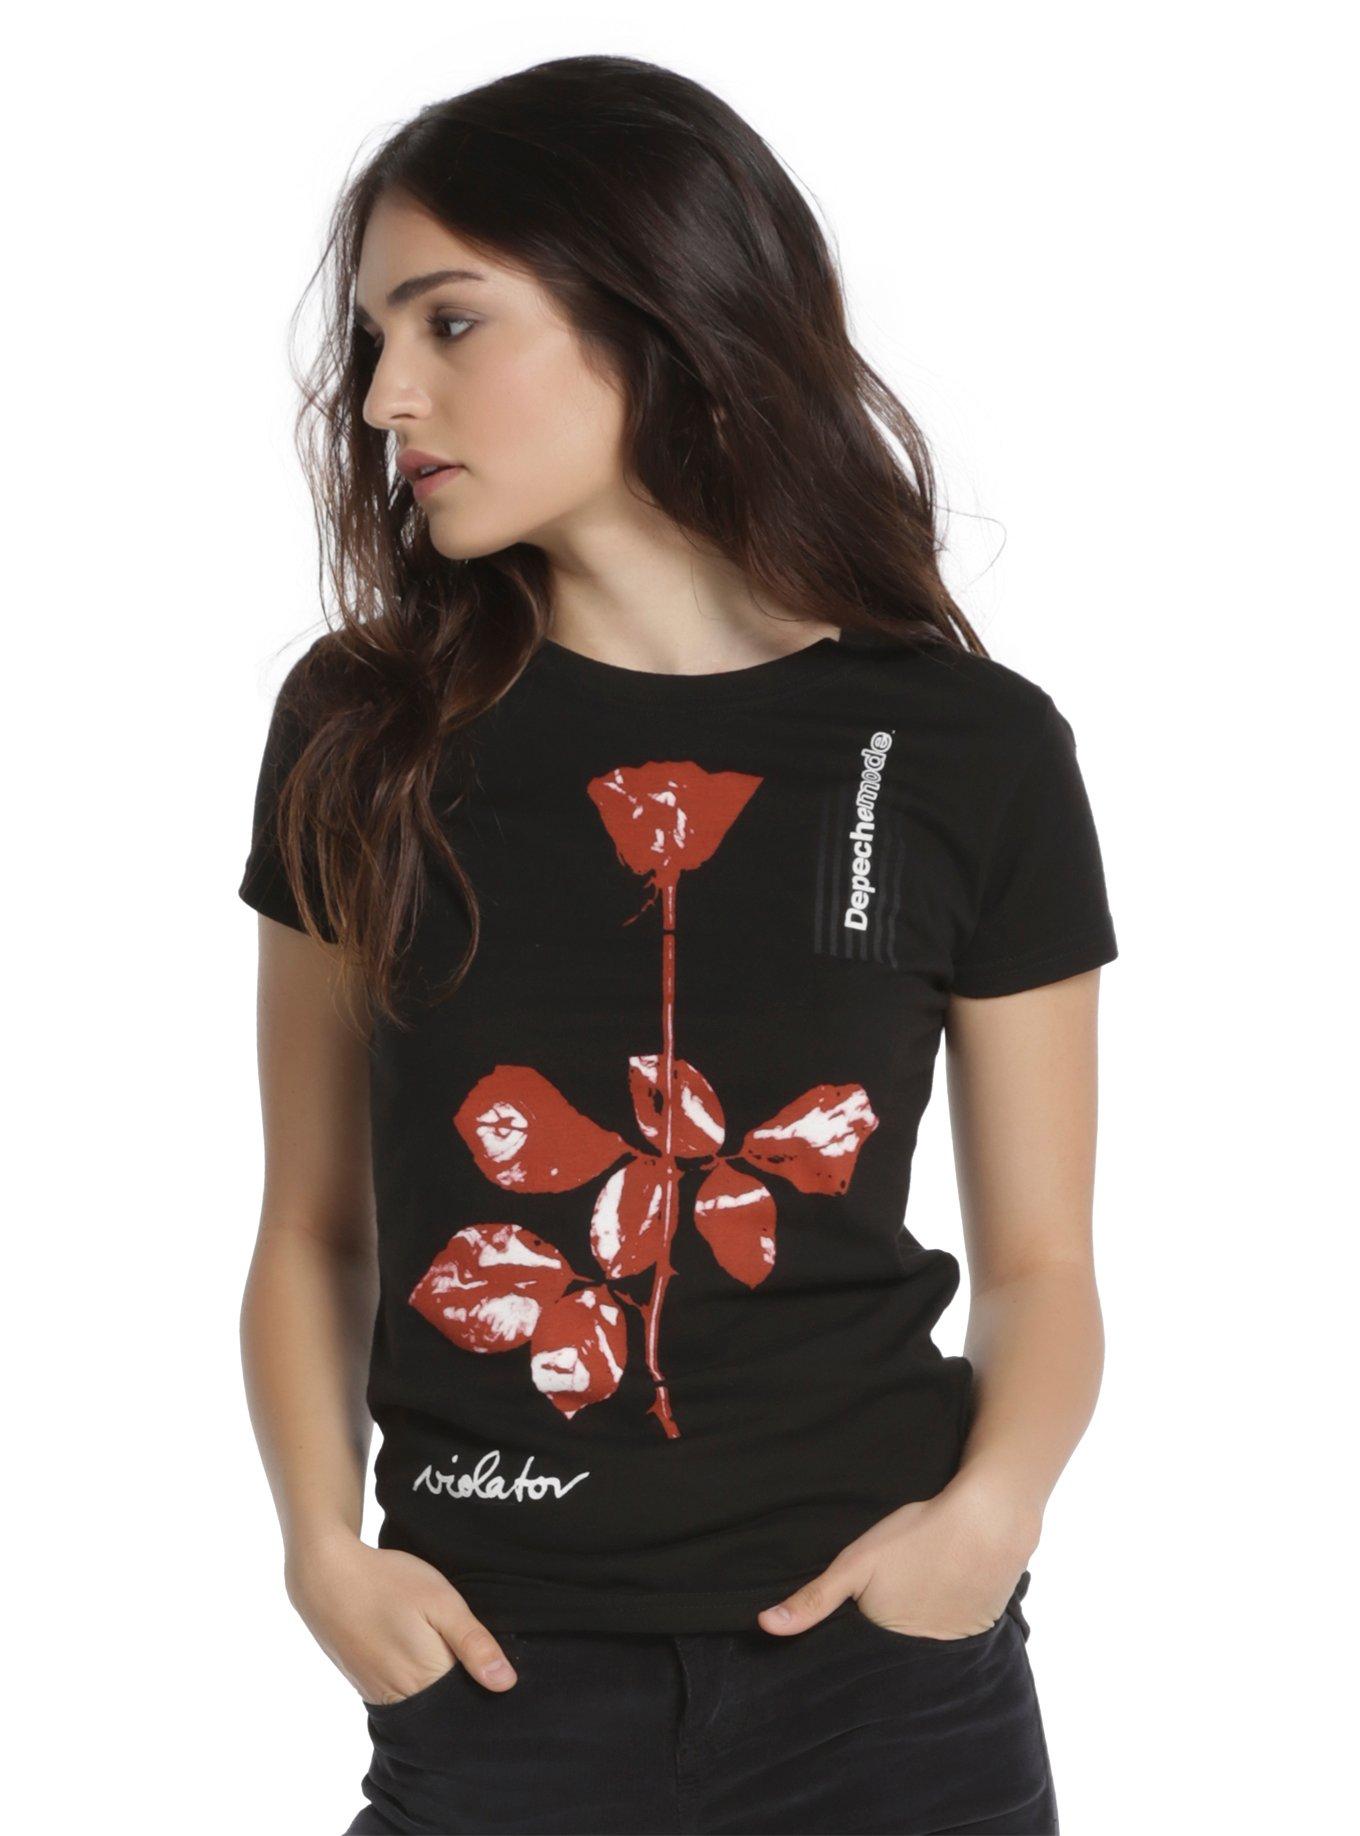 Depeche Mode Violator Girls T-Shirt, BLACK, hi-res